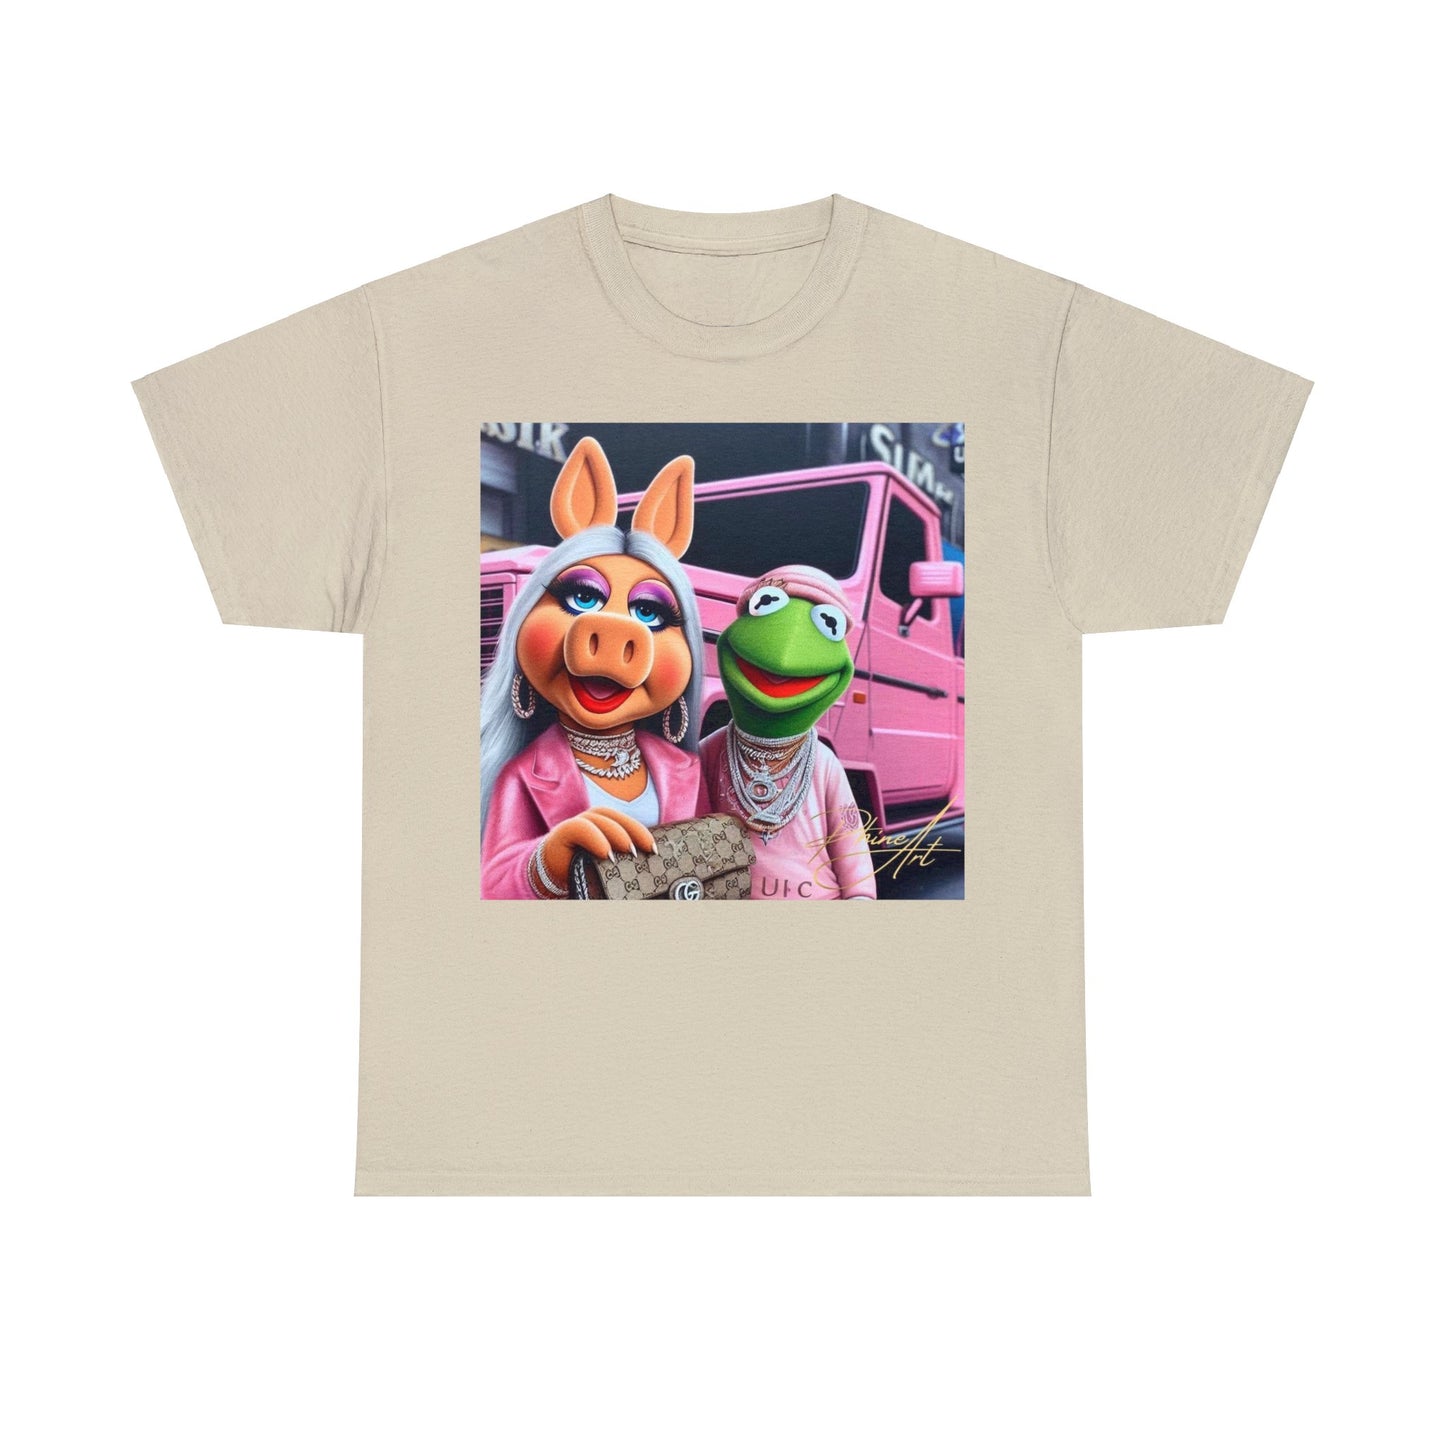 Kermit and Miss Piggy Tee